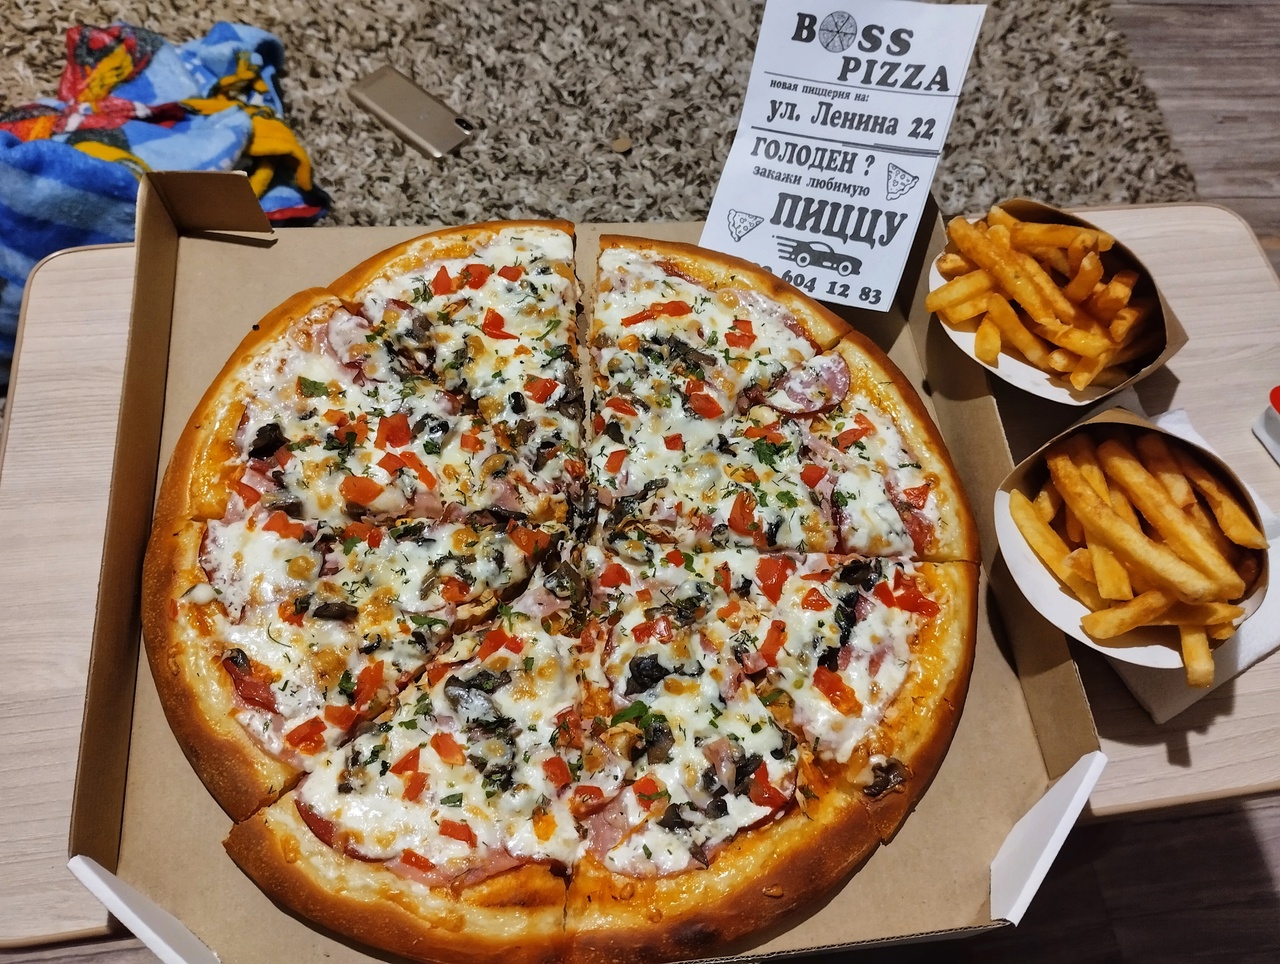 Ресторан доставки Босс Пицца